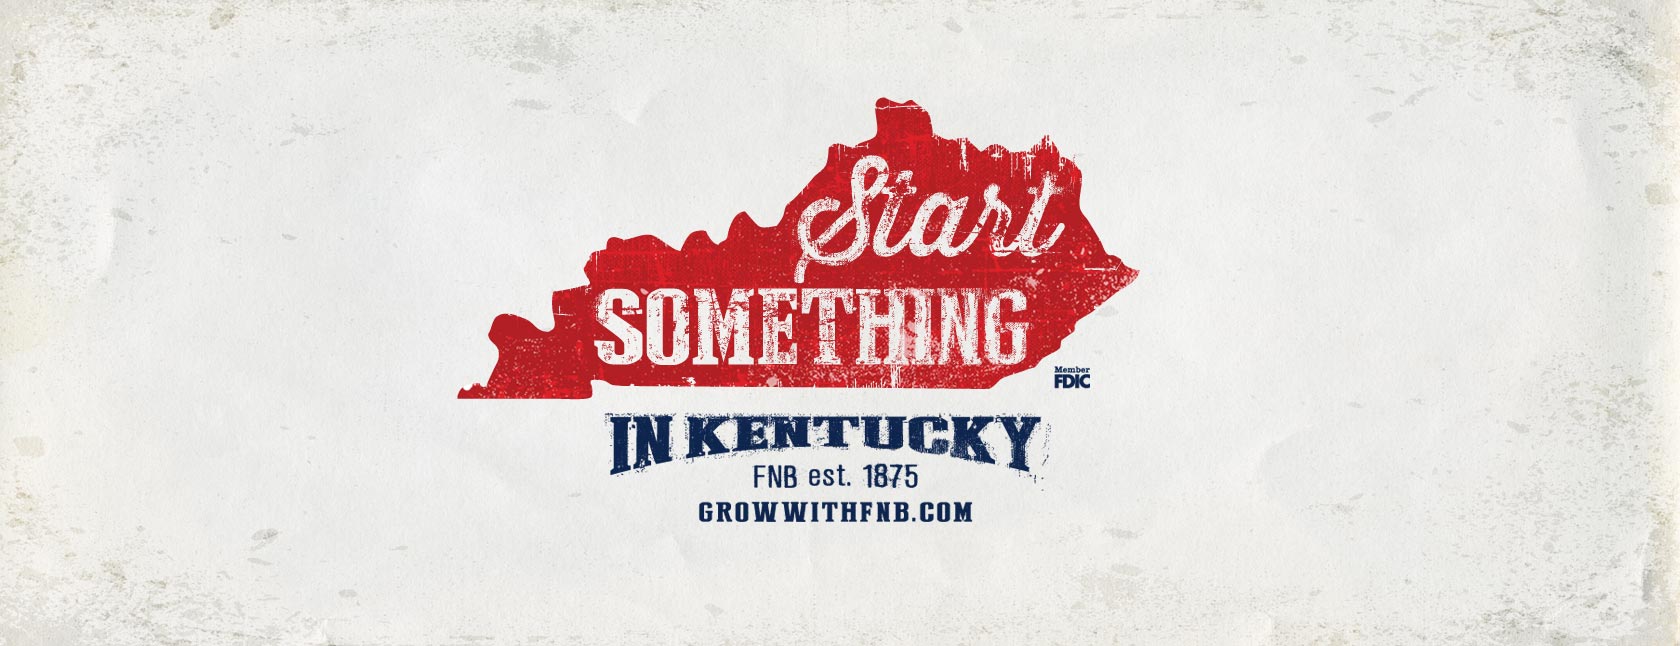 Start Something in Kentucky